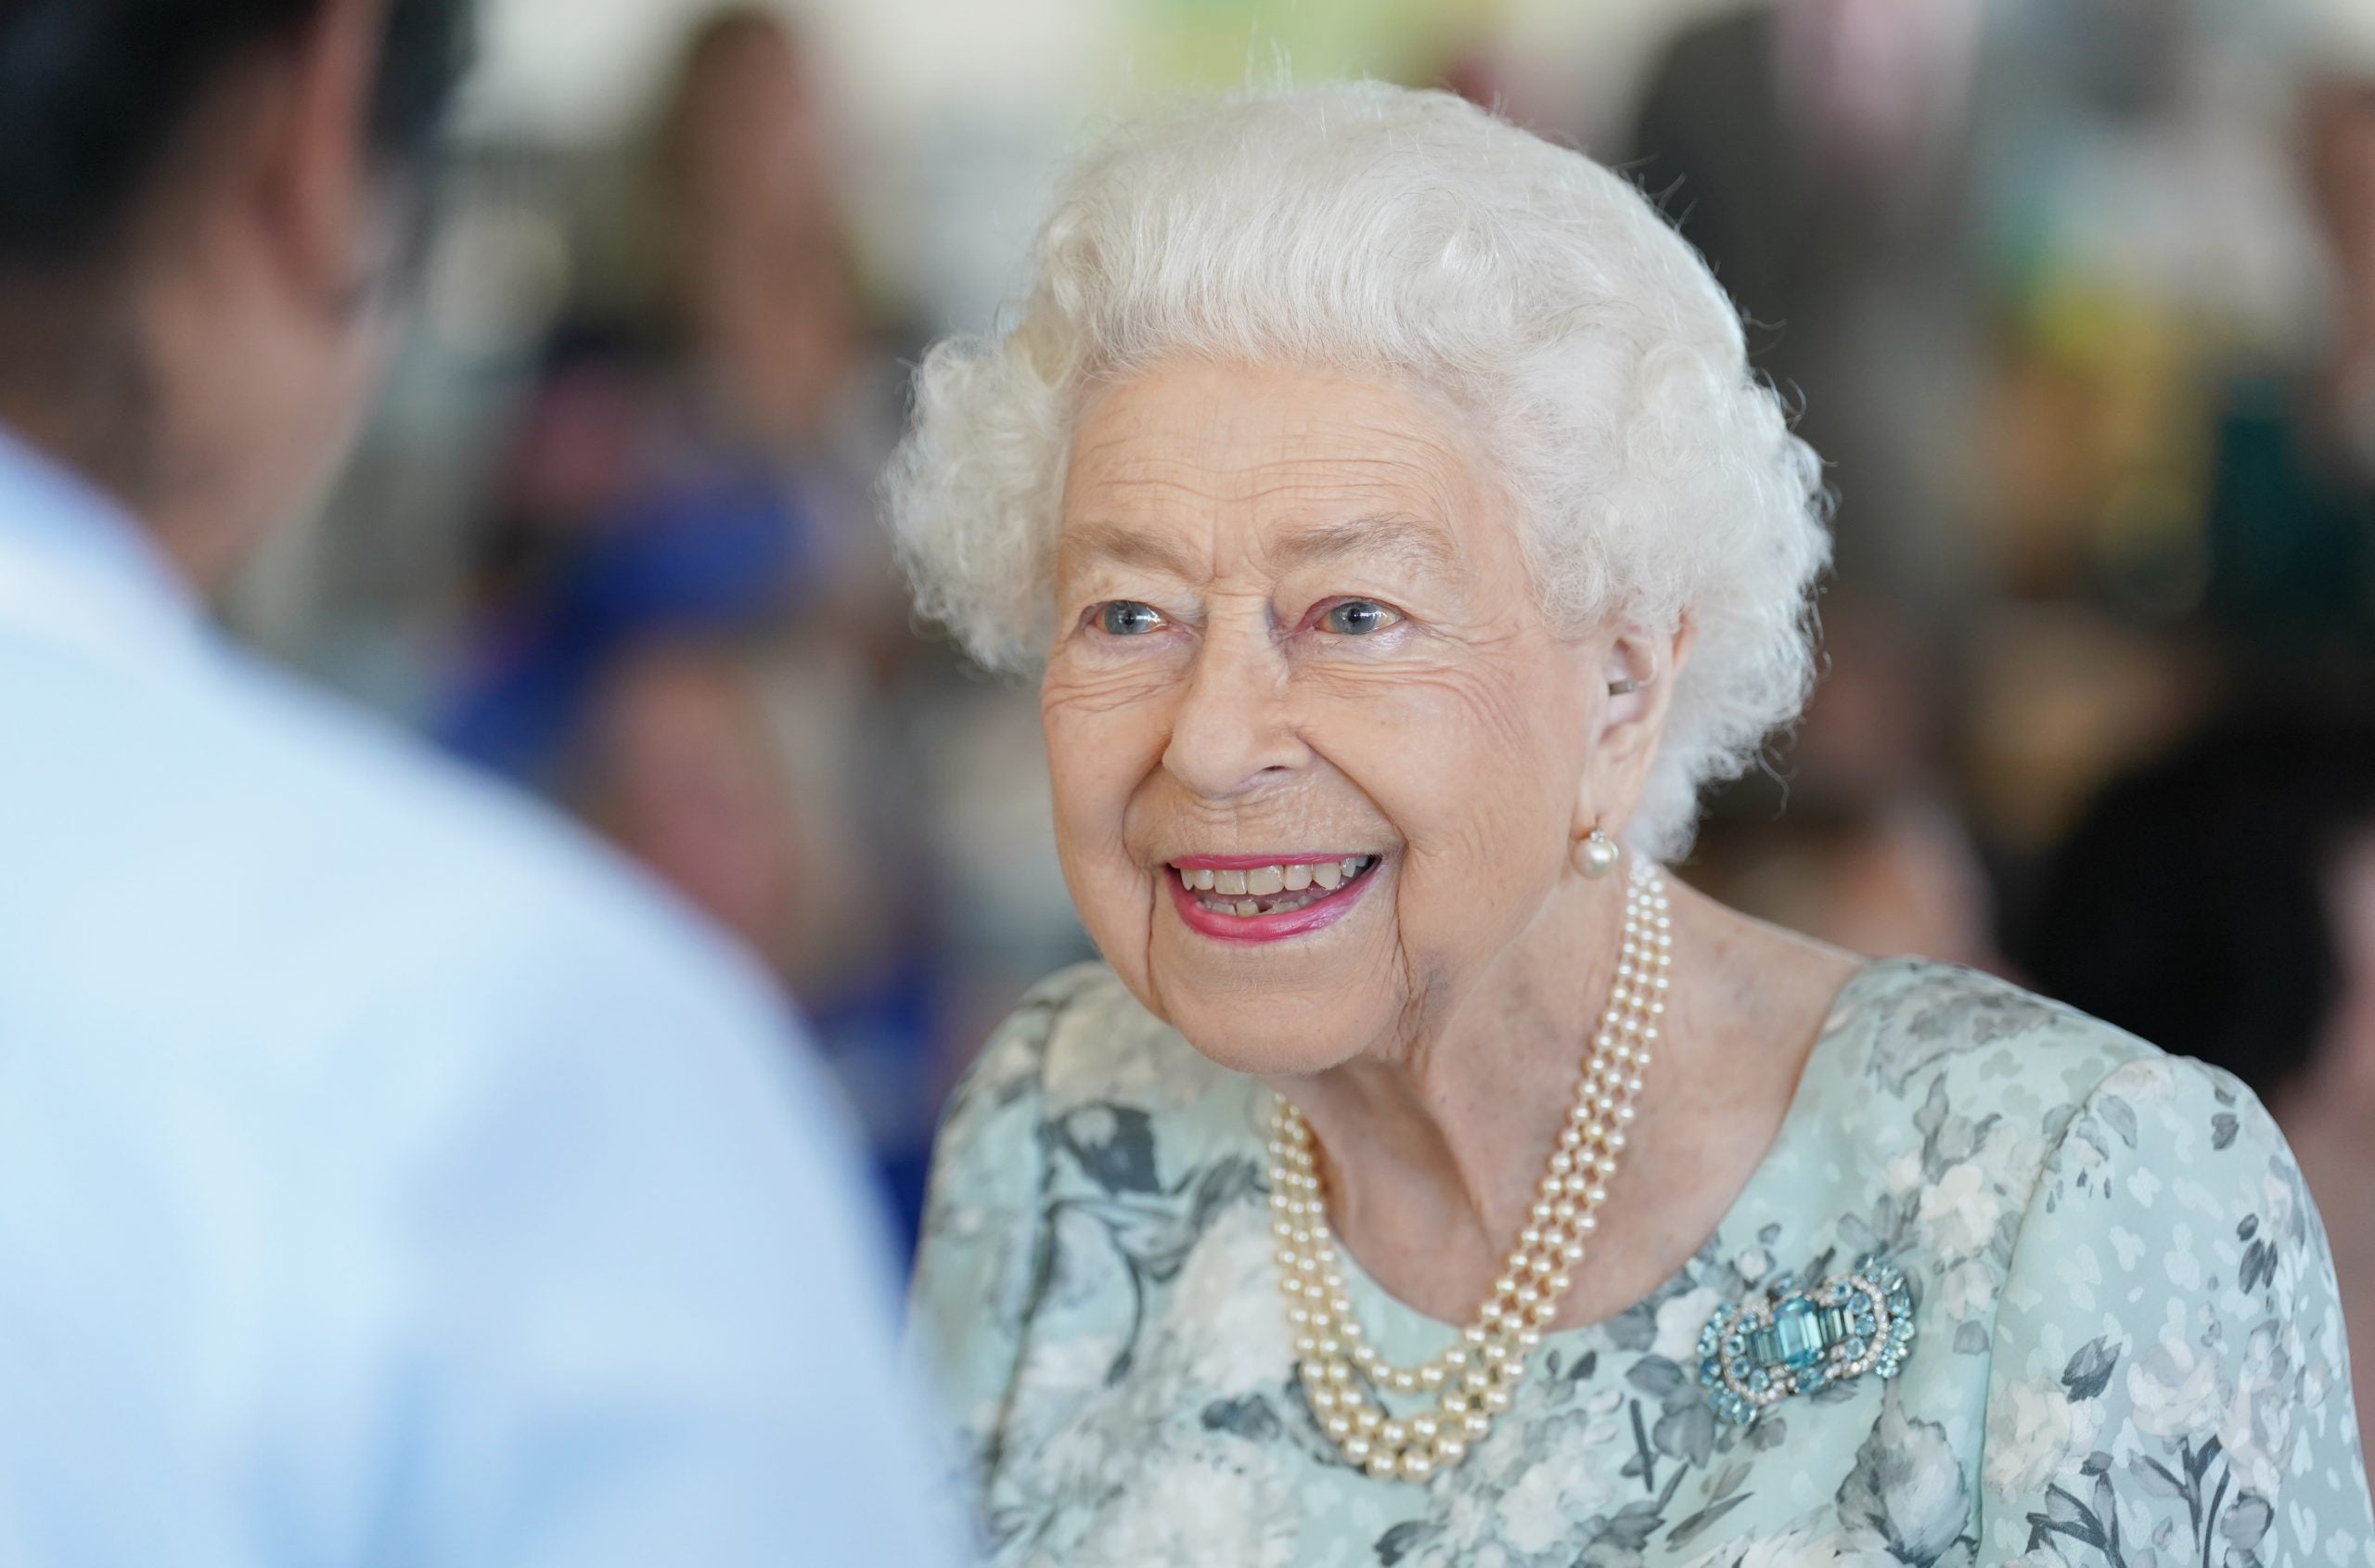 Queen Elizabeth II Dies At 96